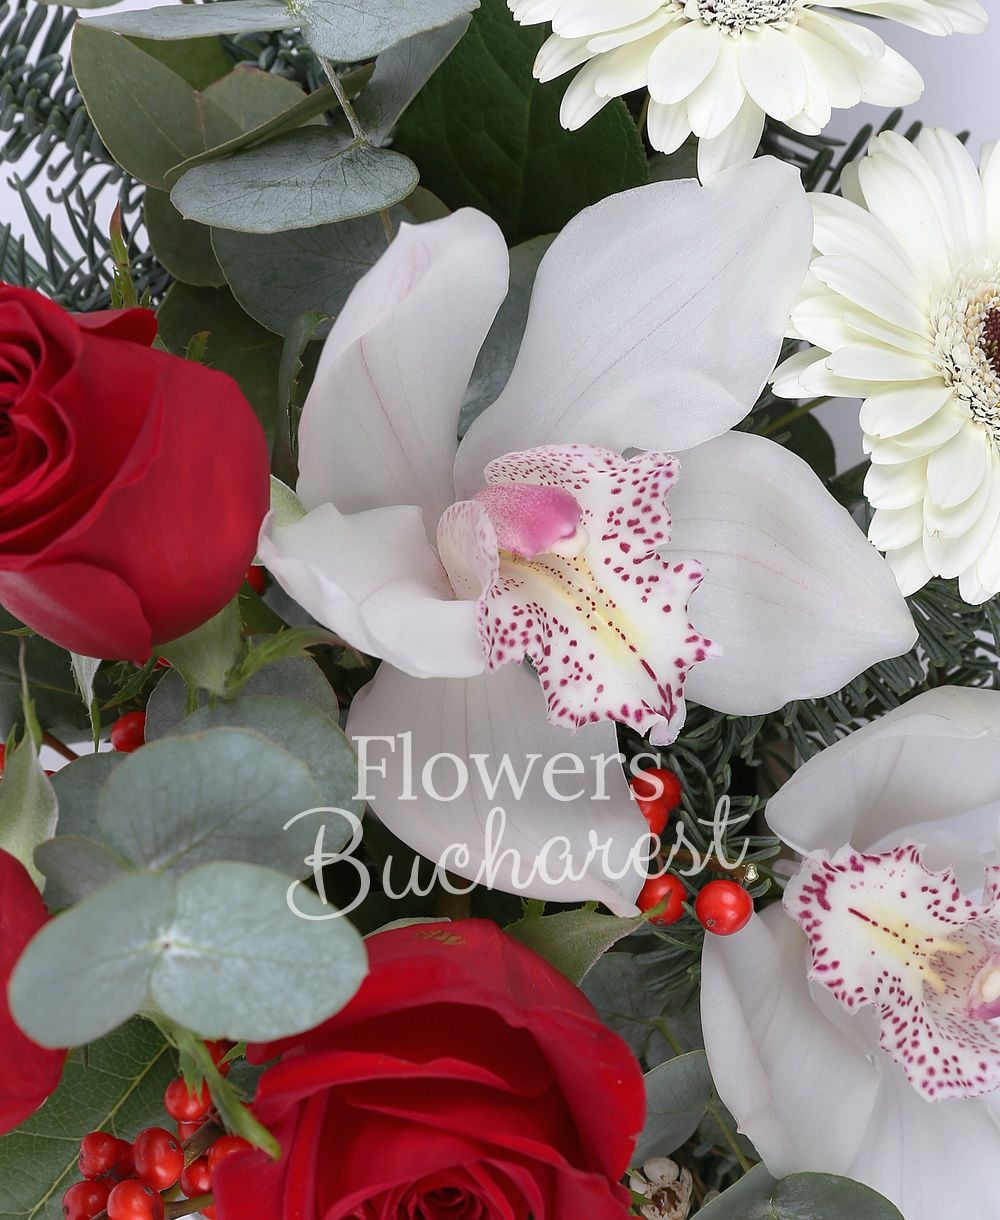 3 red roses, white cymbidium, 3 white gerbera, ilex, waxflower, fir, greenery, vase